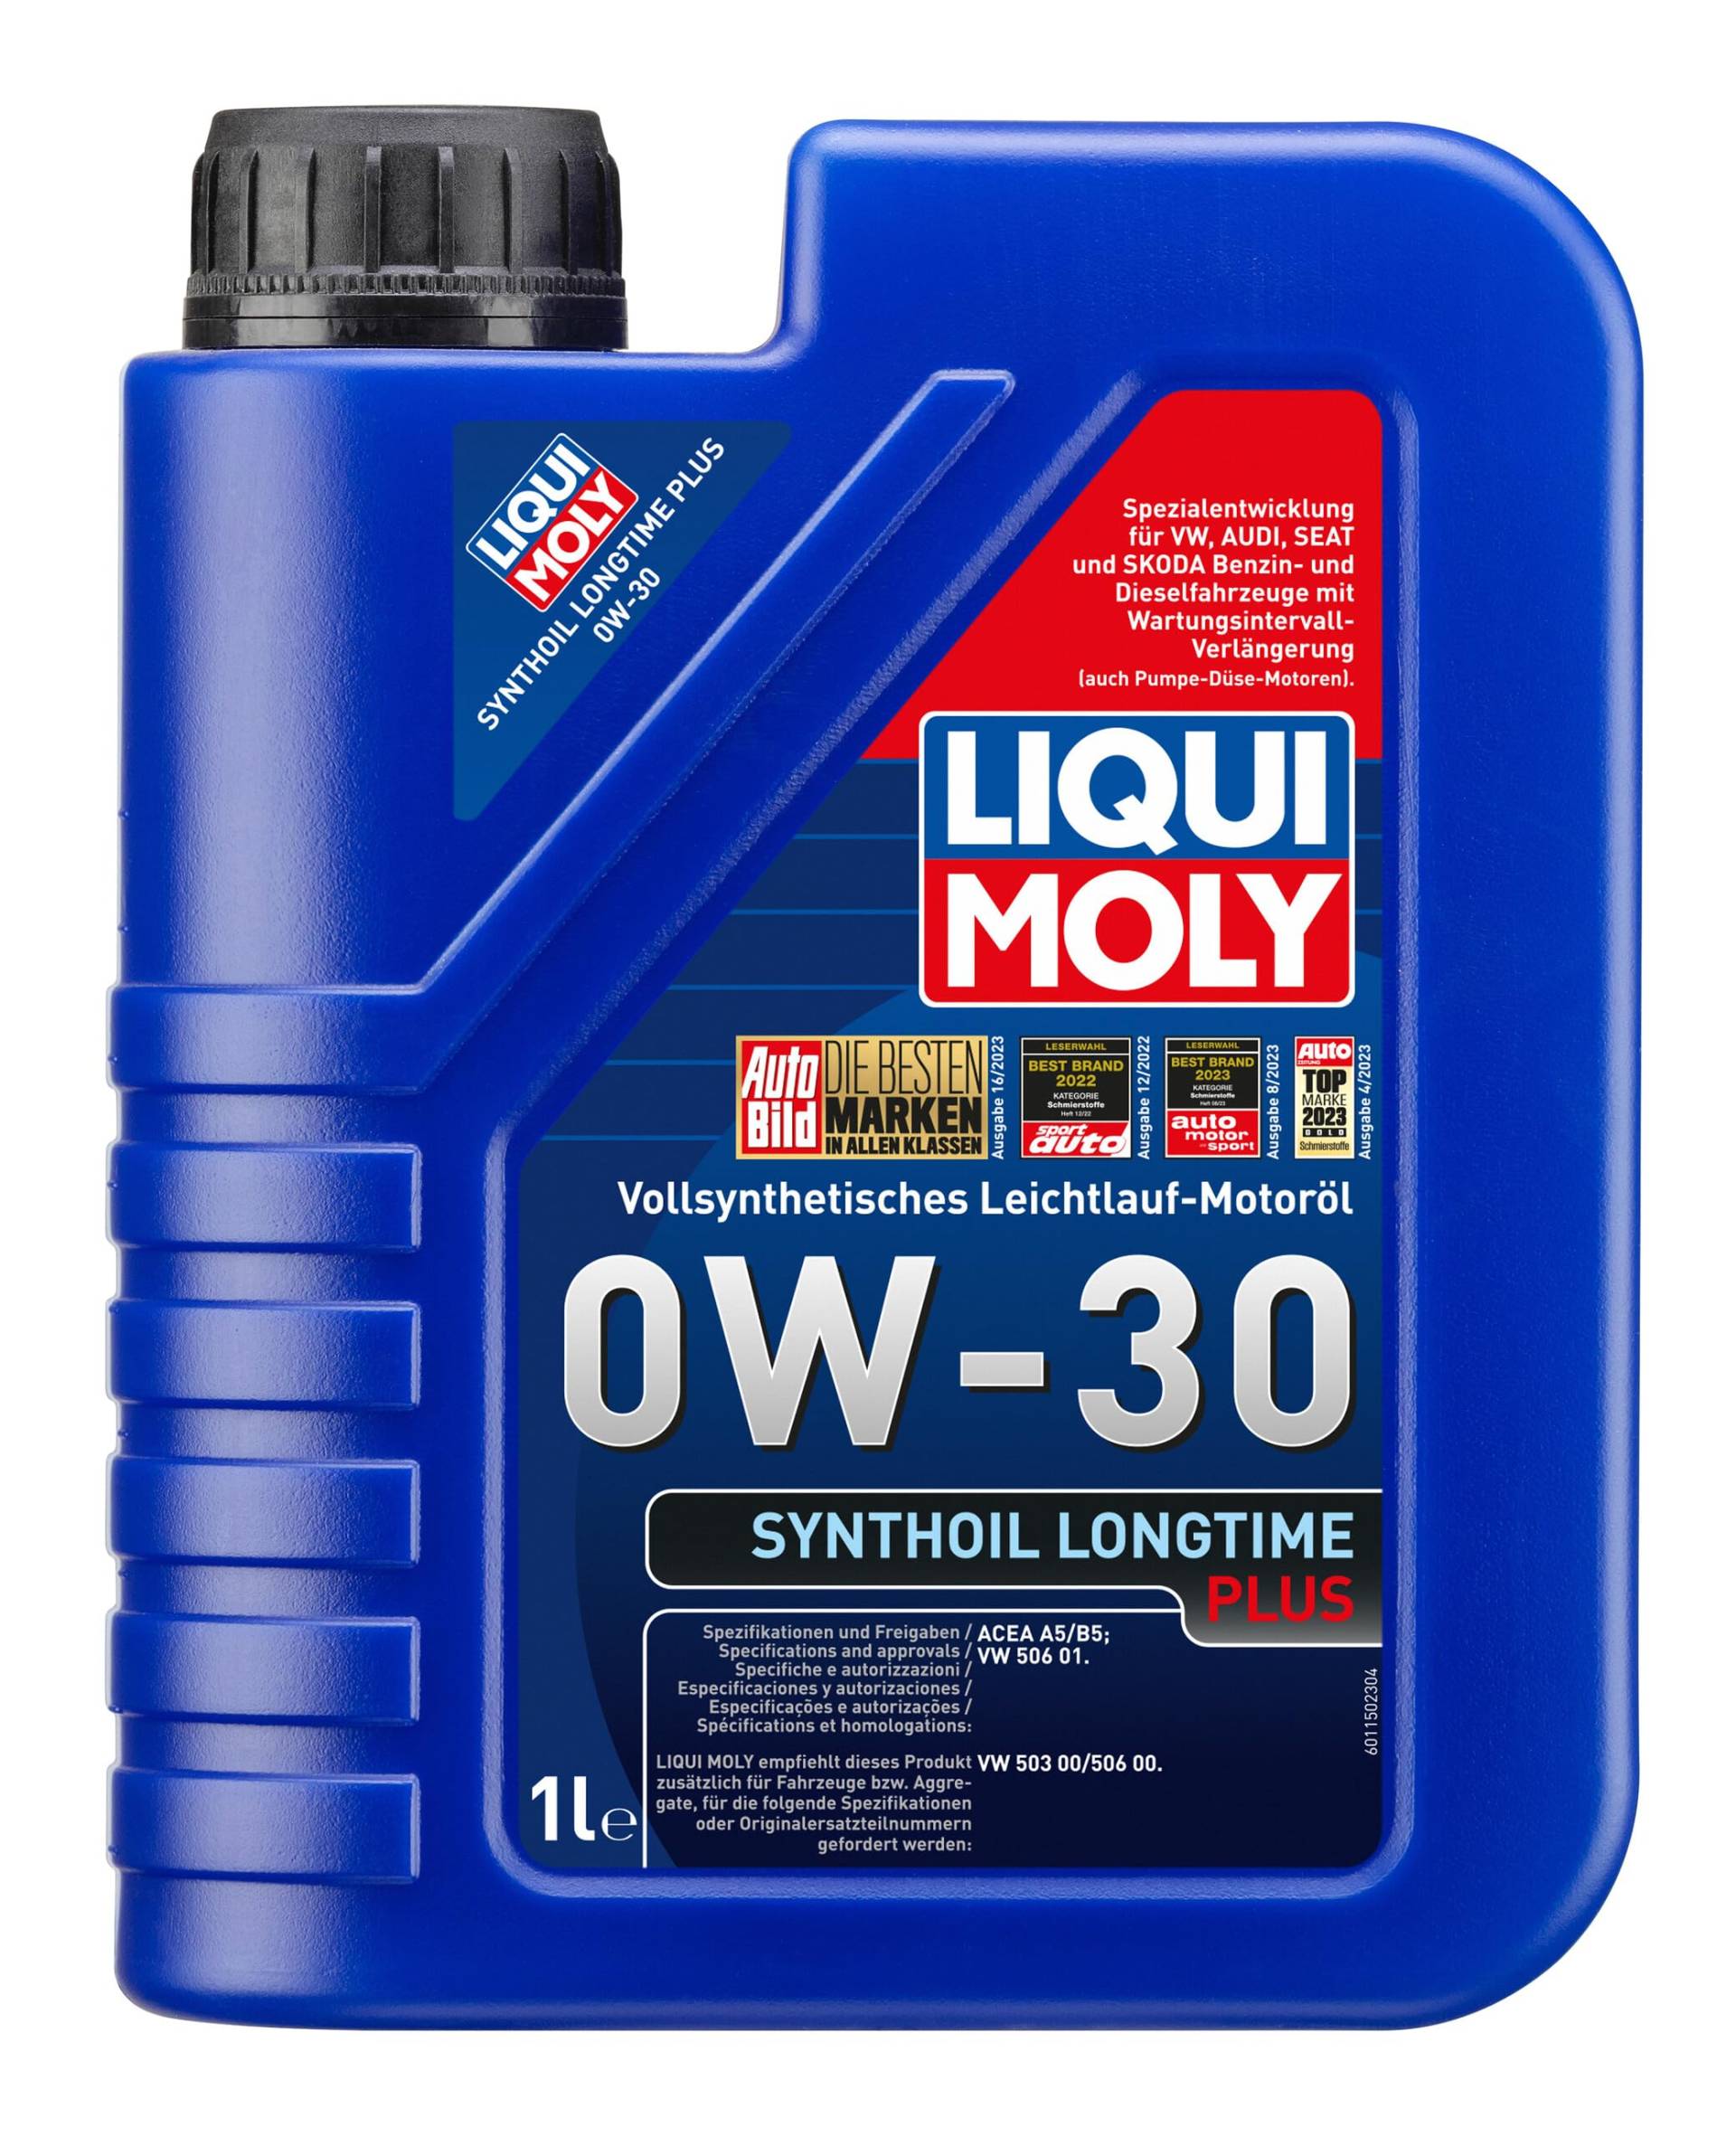 LIQUI MOLY Synthoil Longtime Plus 0W-30 | 1 L | vollsynthetisches Motoröl | Art.-Nr.: 1150 von Liqui Moly